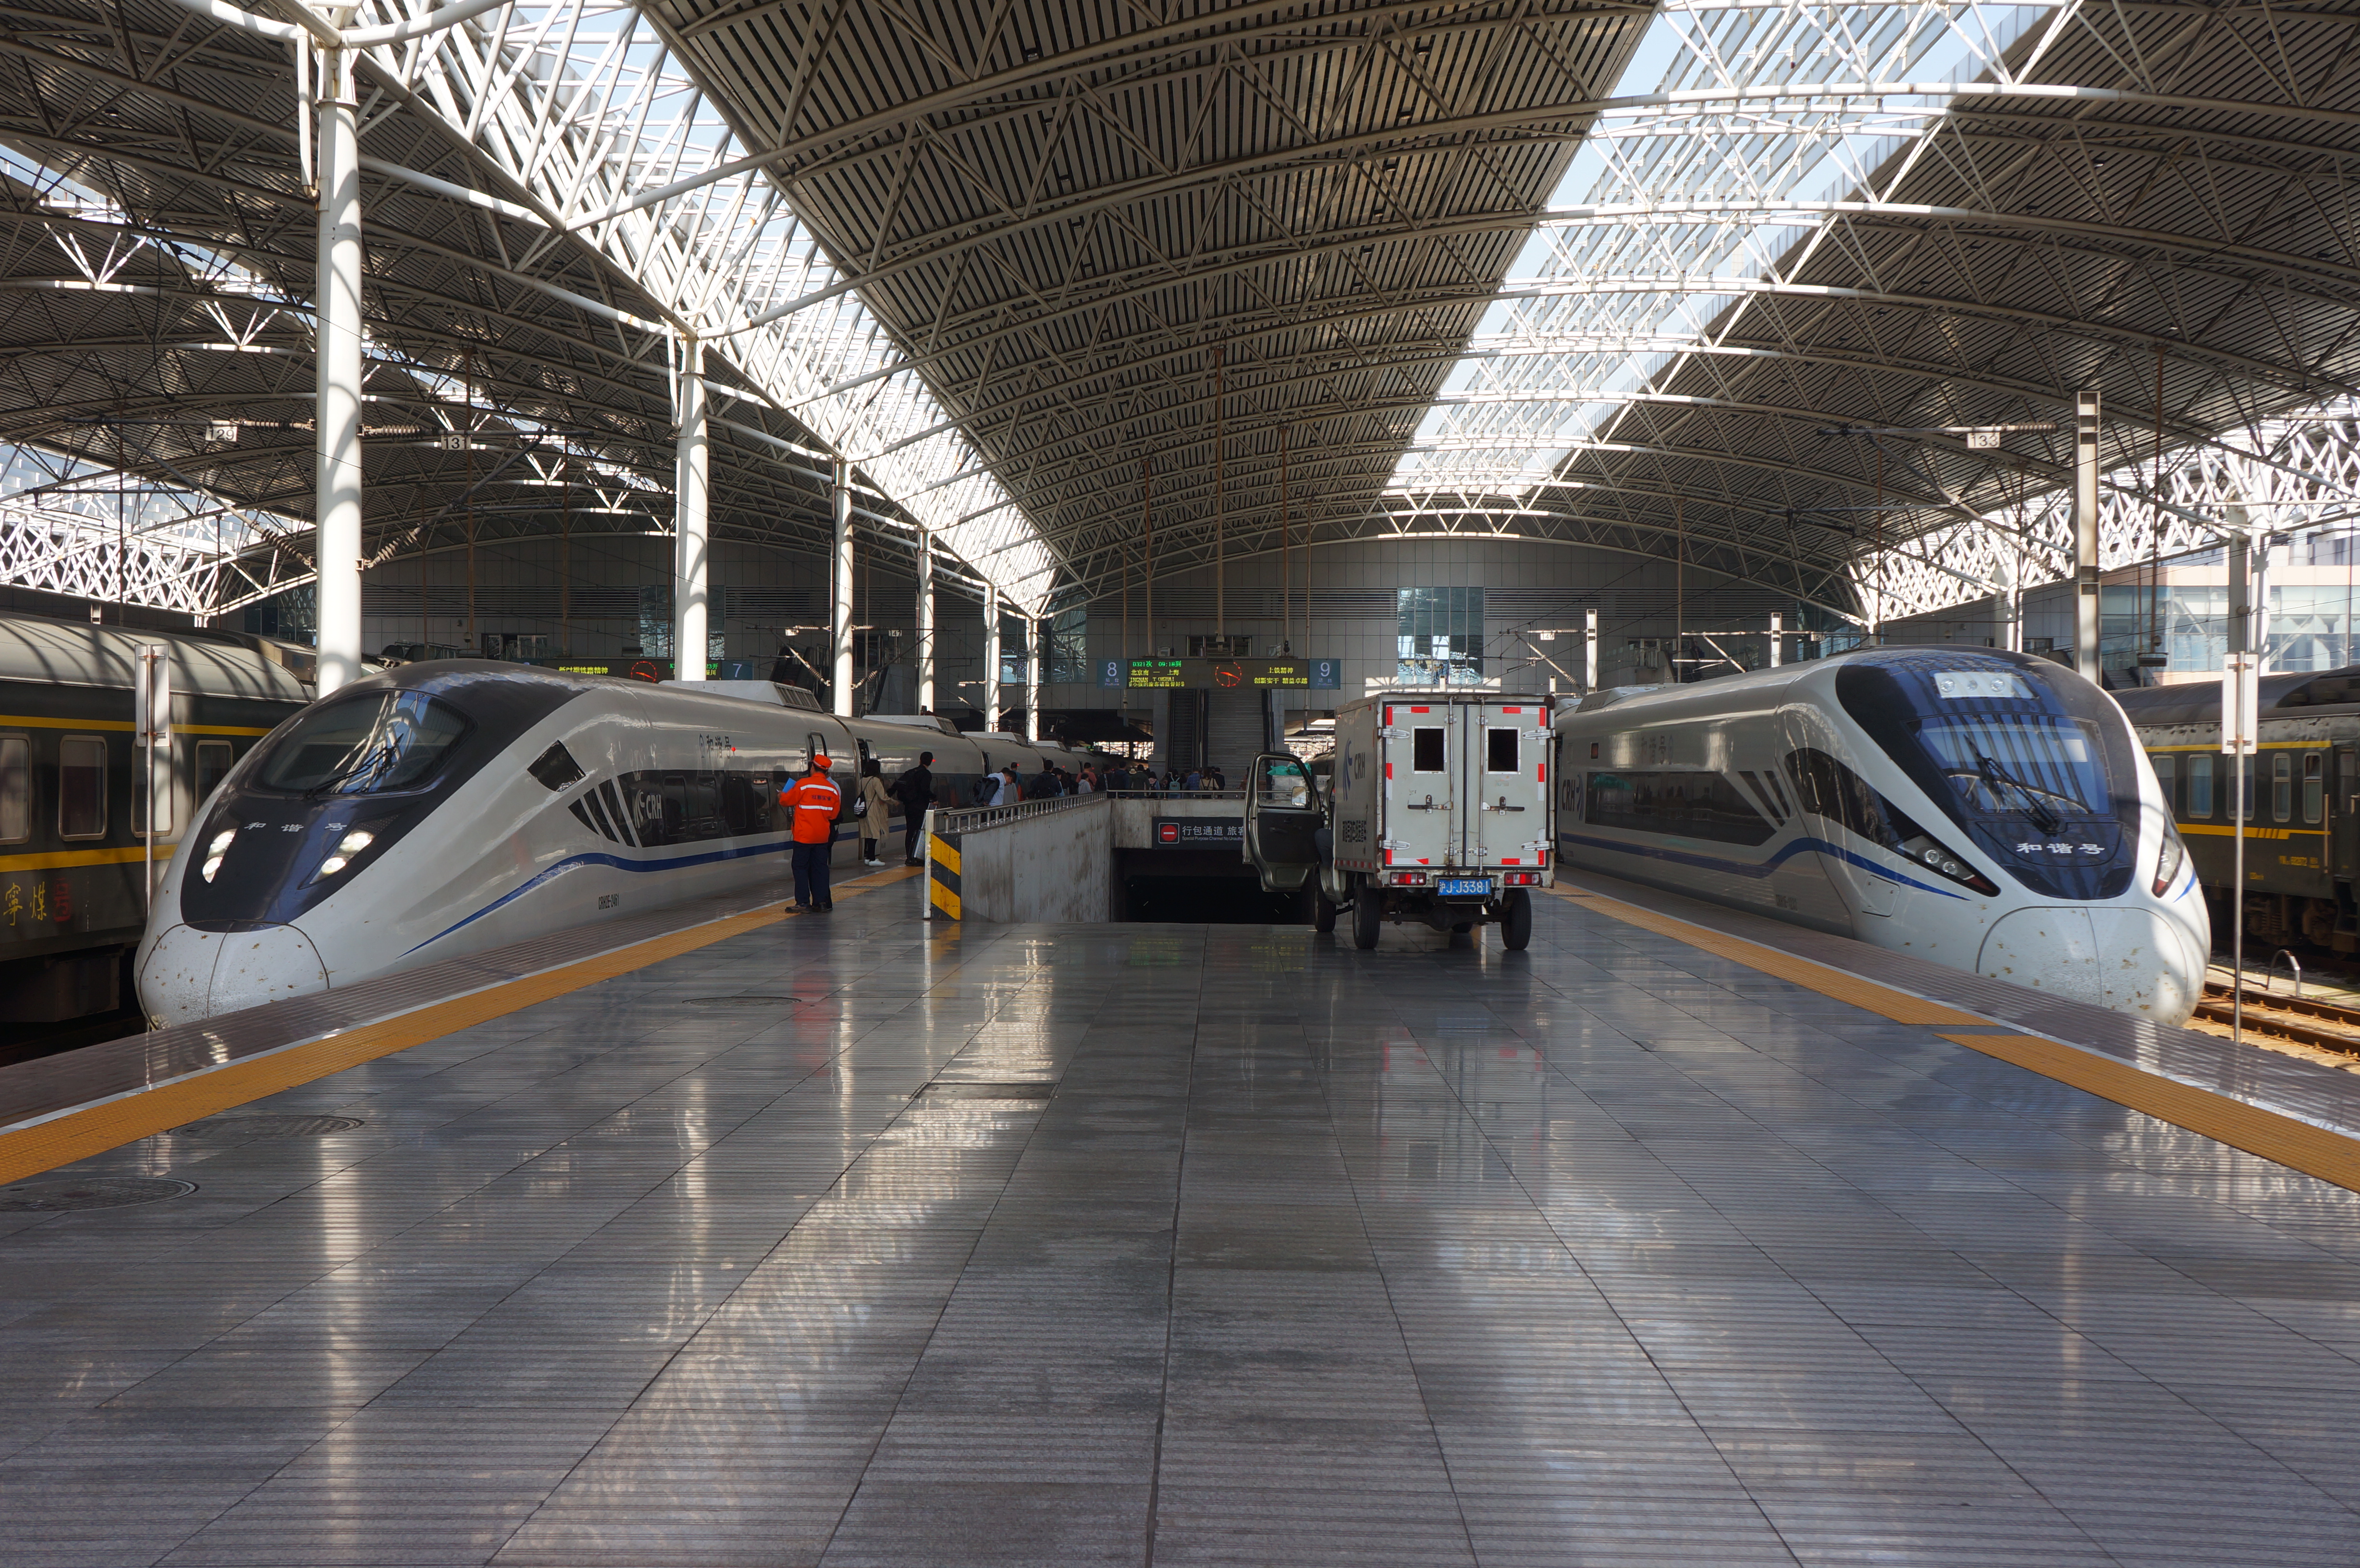 Shanghai railway station - Wikipedia